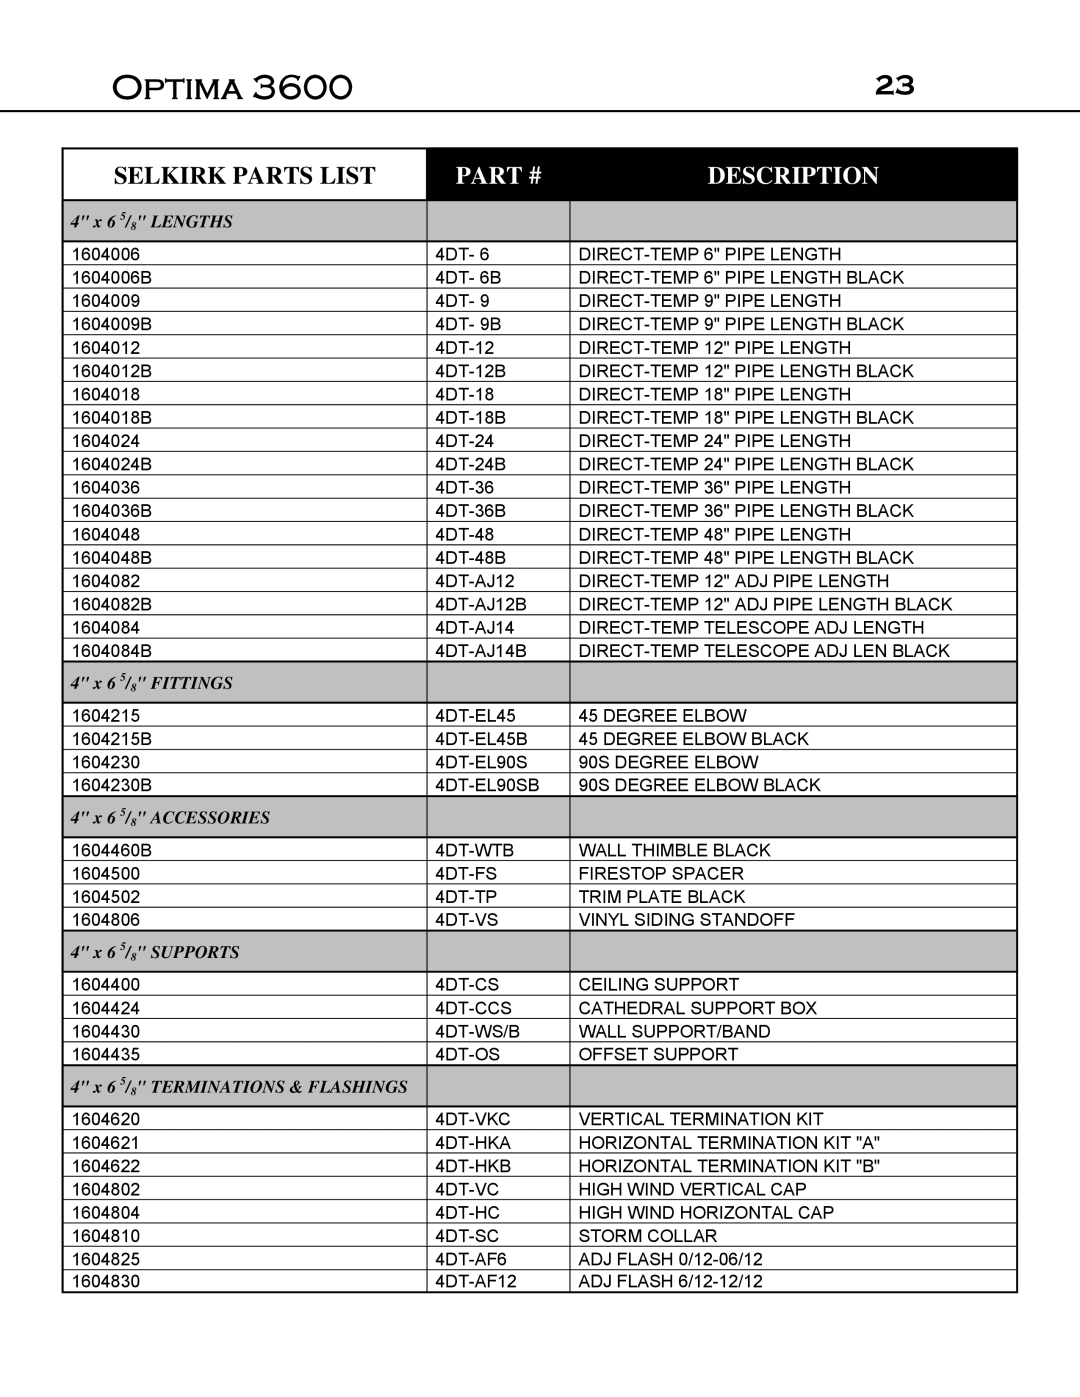 Optima Company Optima 3600O manual Selkirk Parts List, Part #, Description, 4 x 6 5/8 LENGTHS, 4 x 6 5/8 FITTINGS 